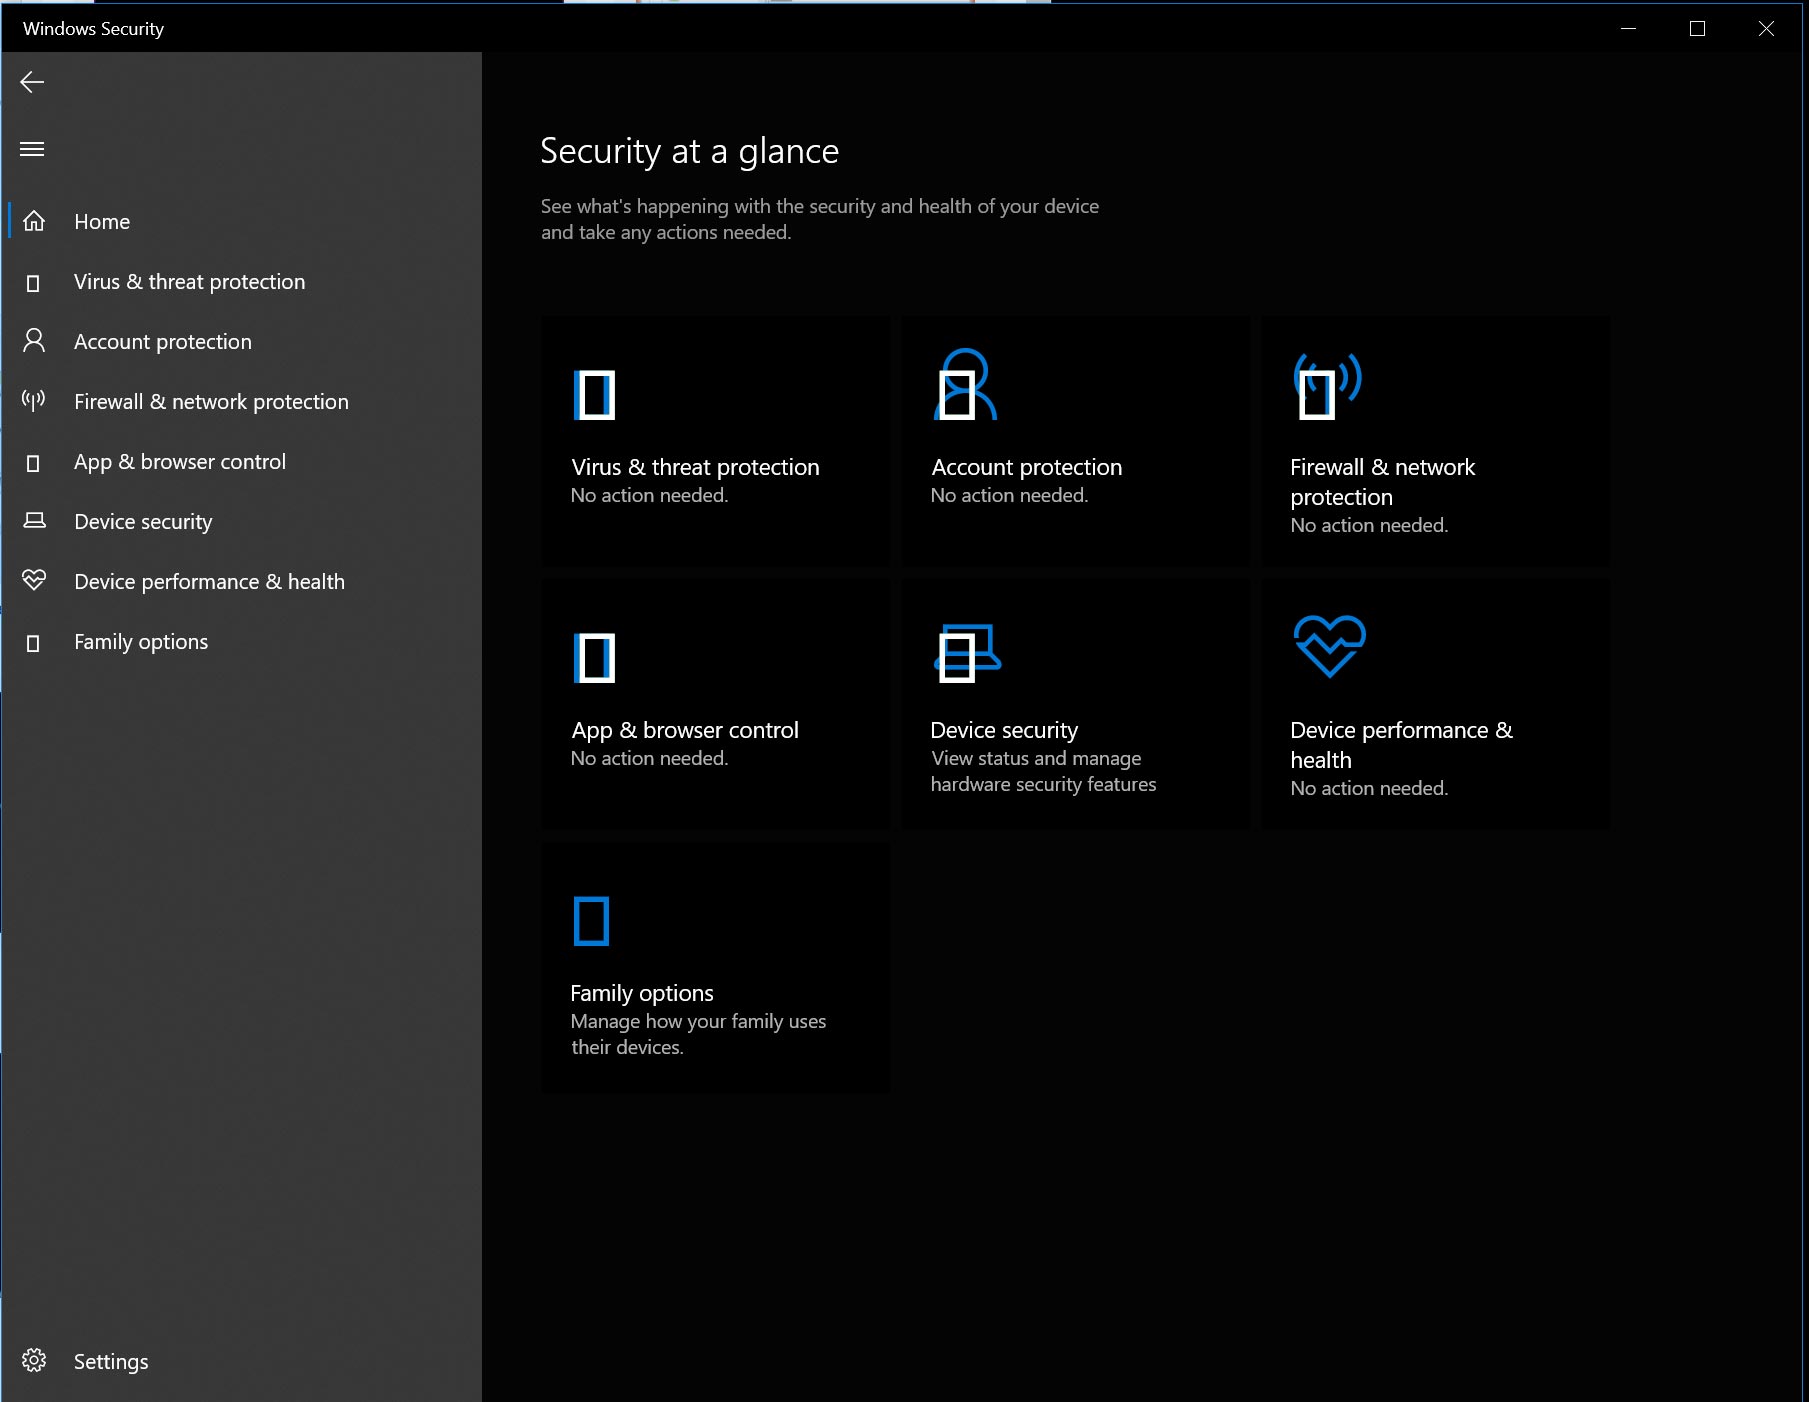 Windows Security App icons' badges are missing e647c036-bc04-431e-ac91-0729614e48c3?upload=true.jpg